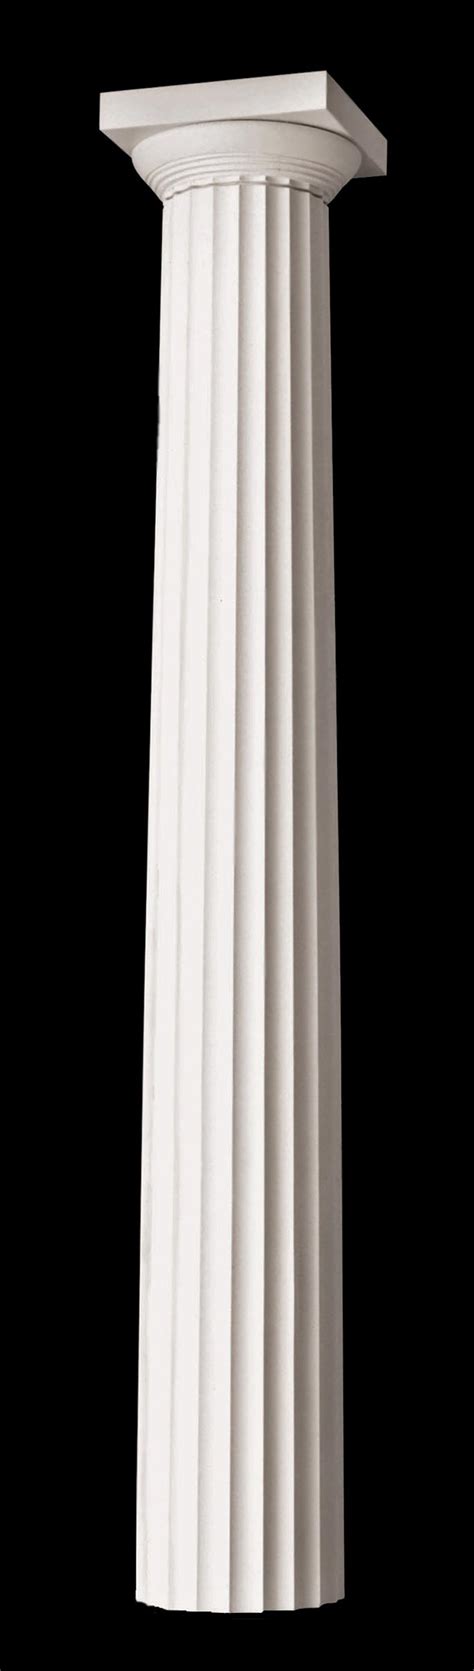 fluted architectural greek doric wood columns csi code  chadsworth columns